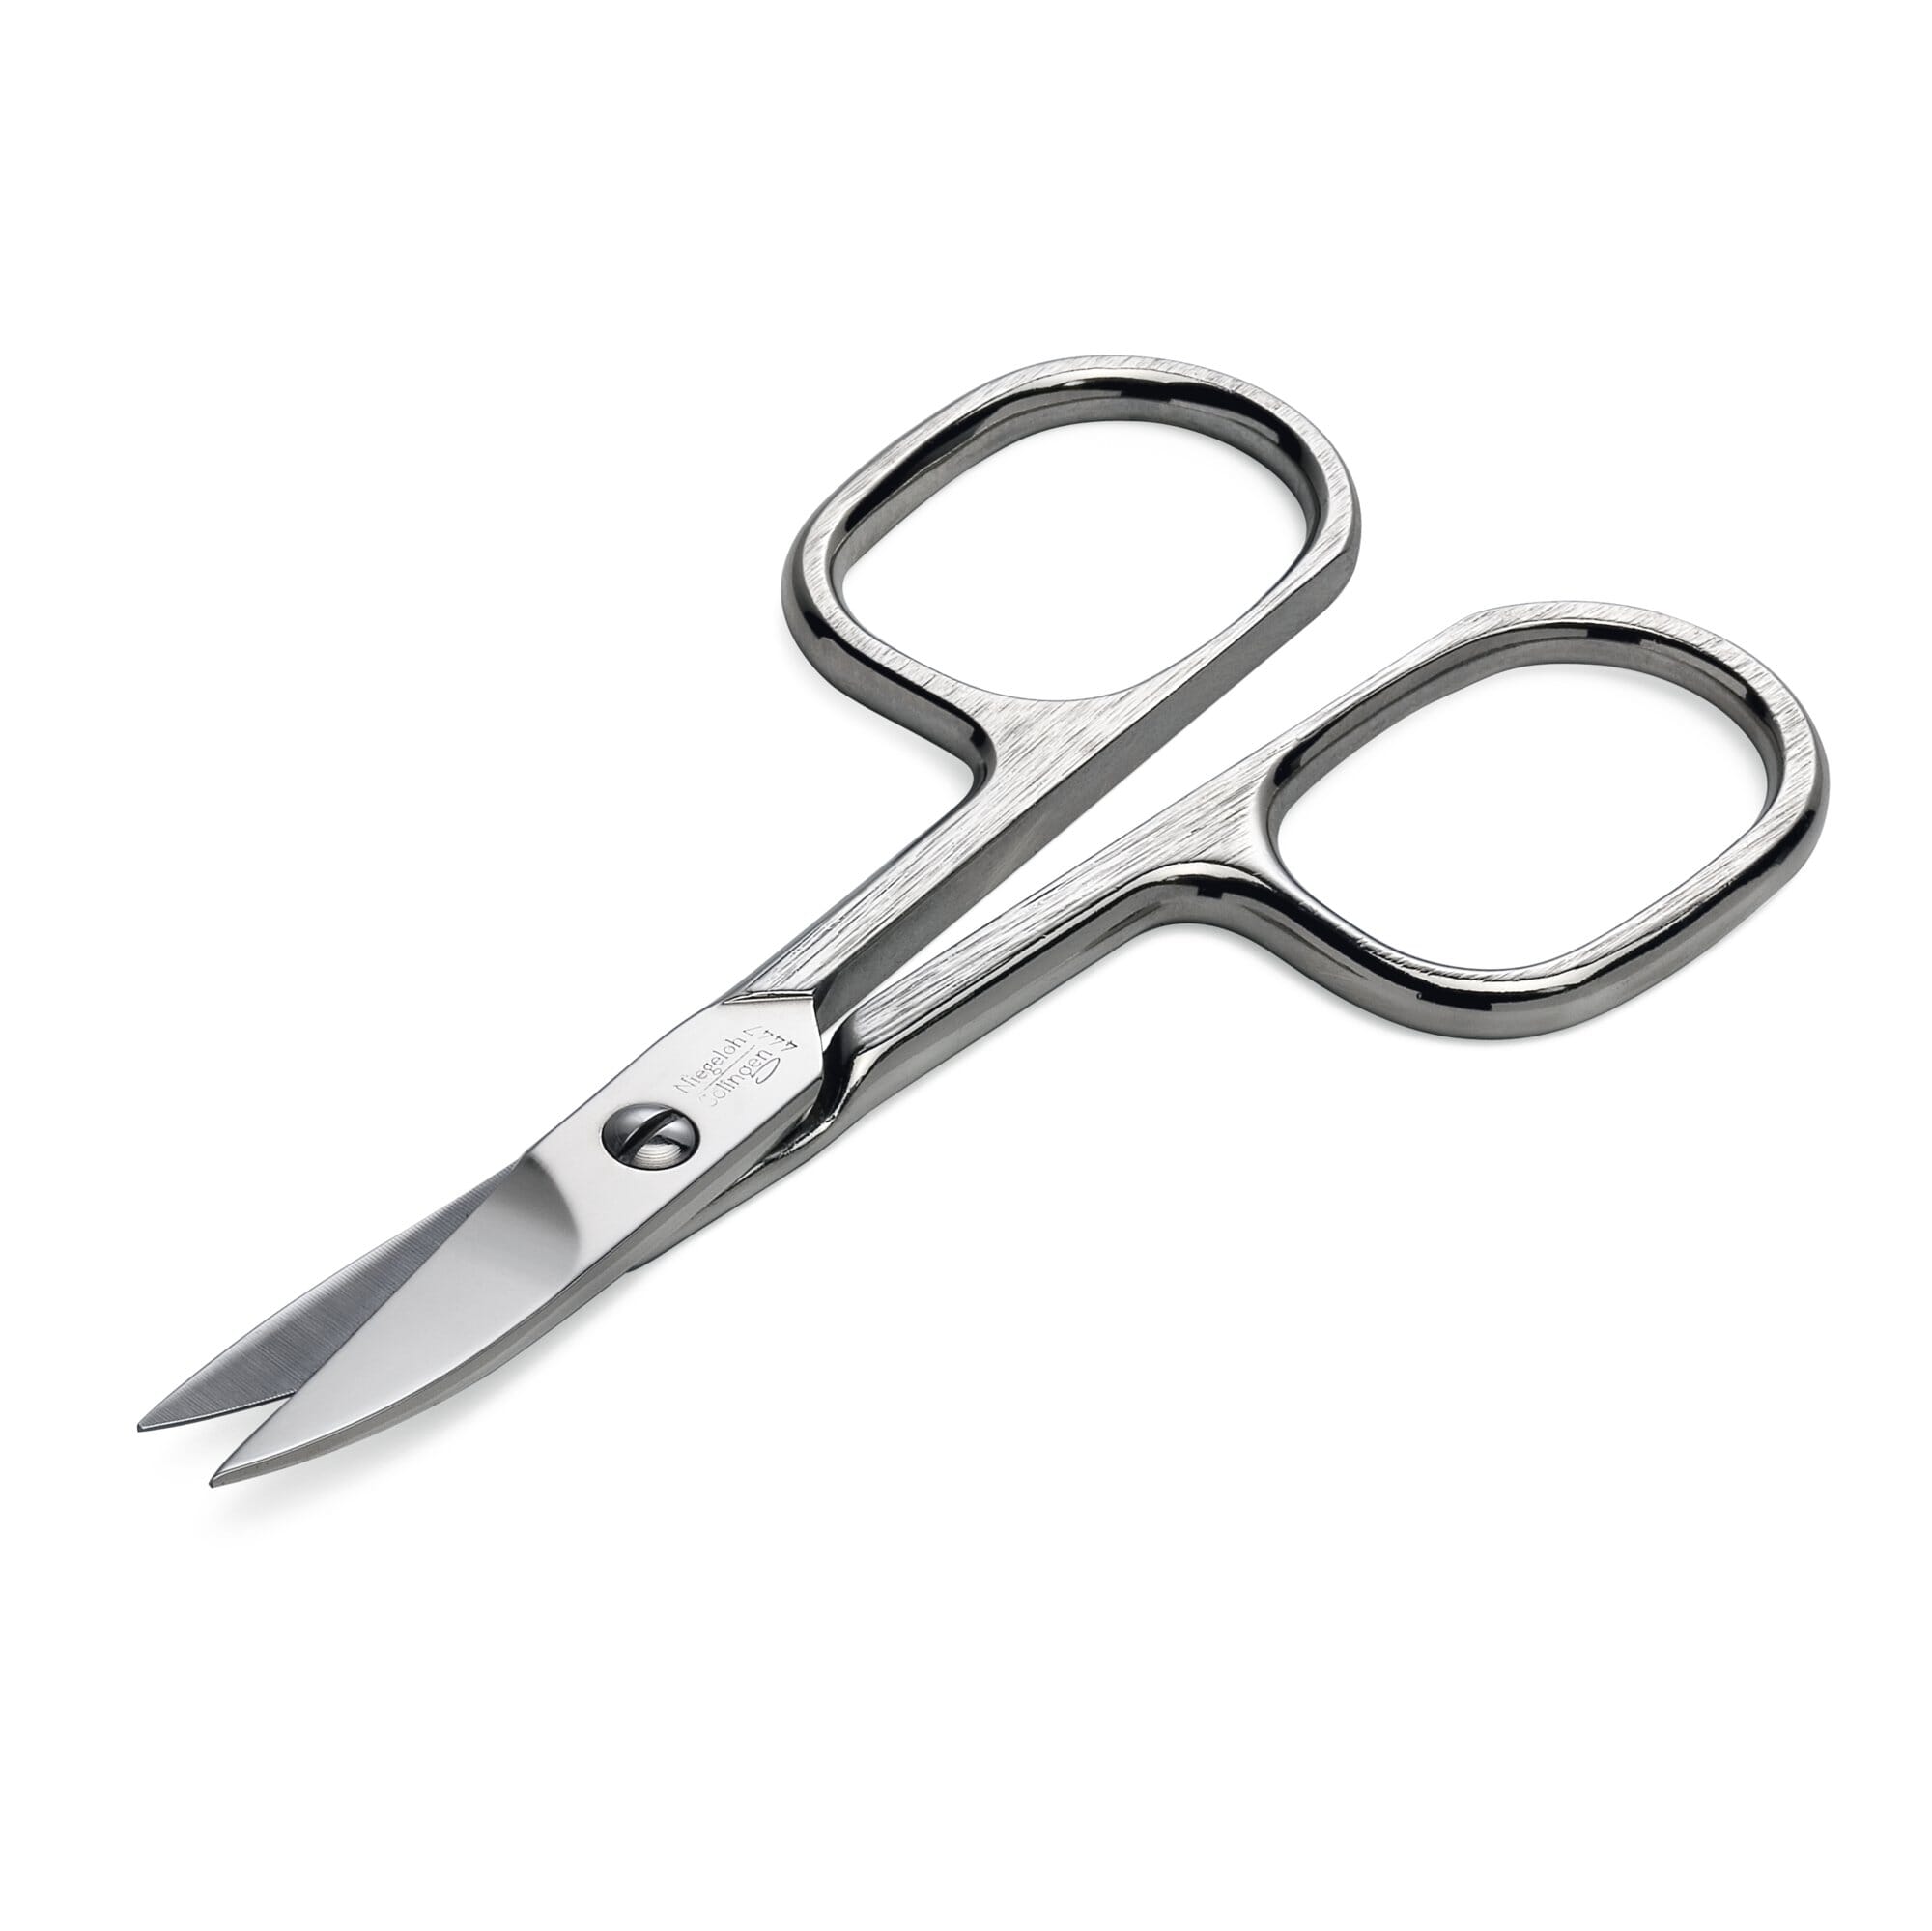 Nail scissors carbon steel